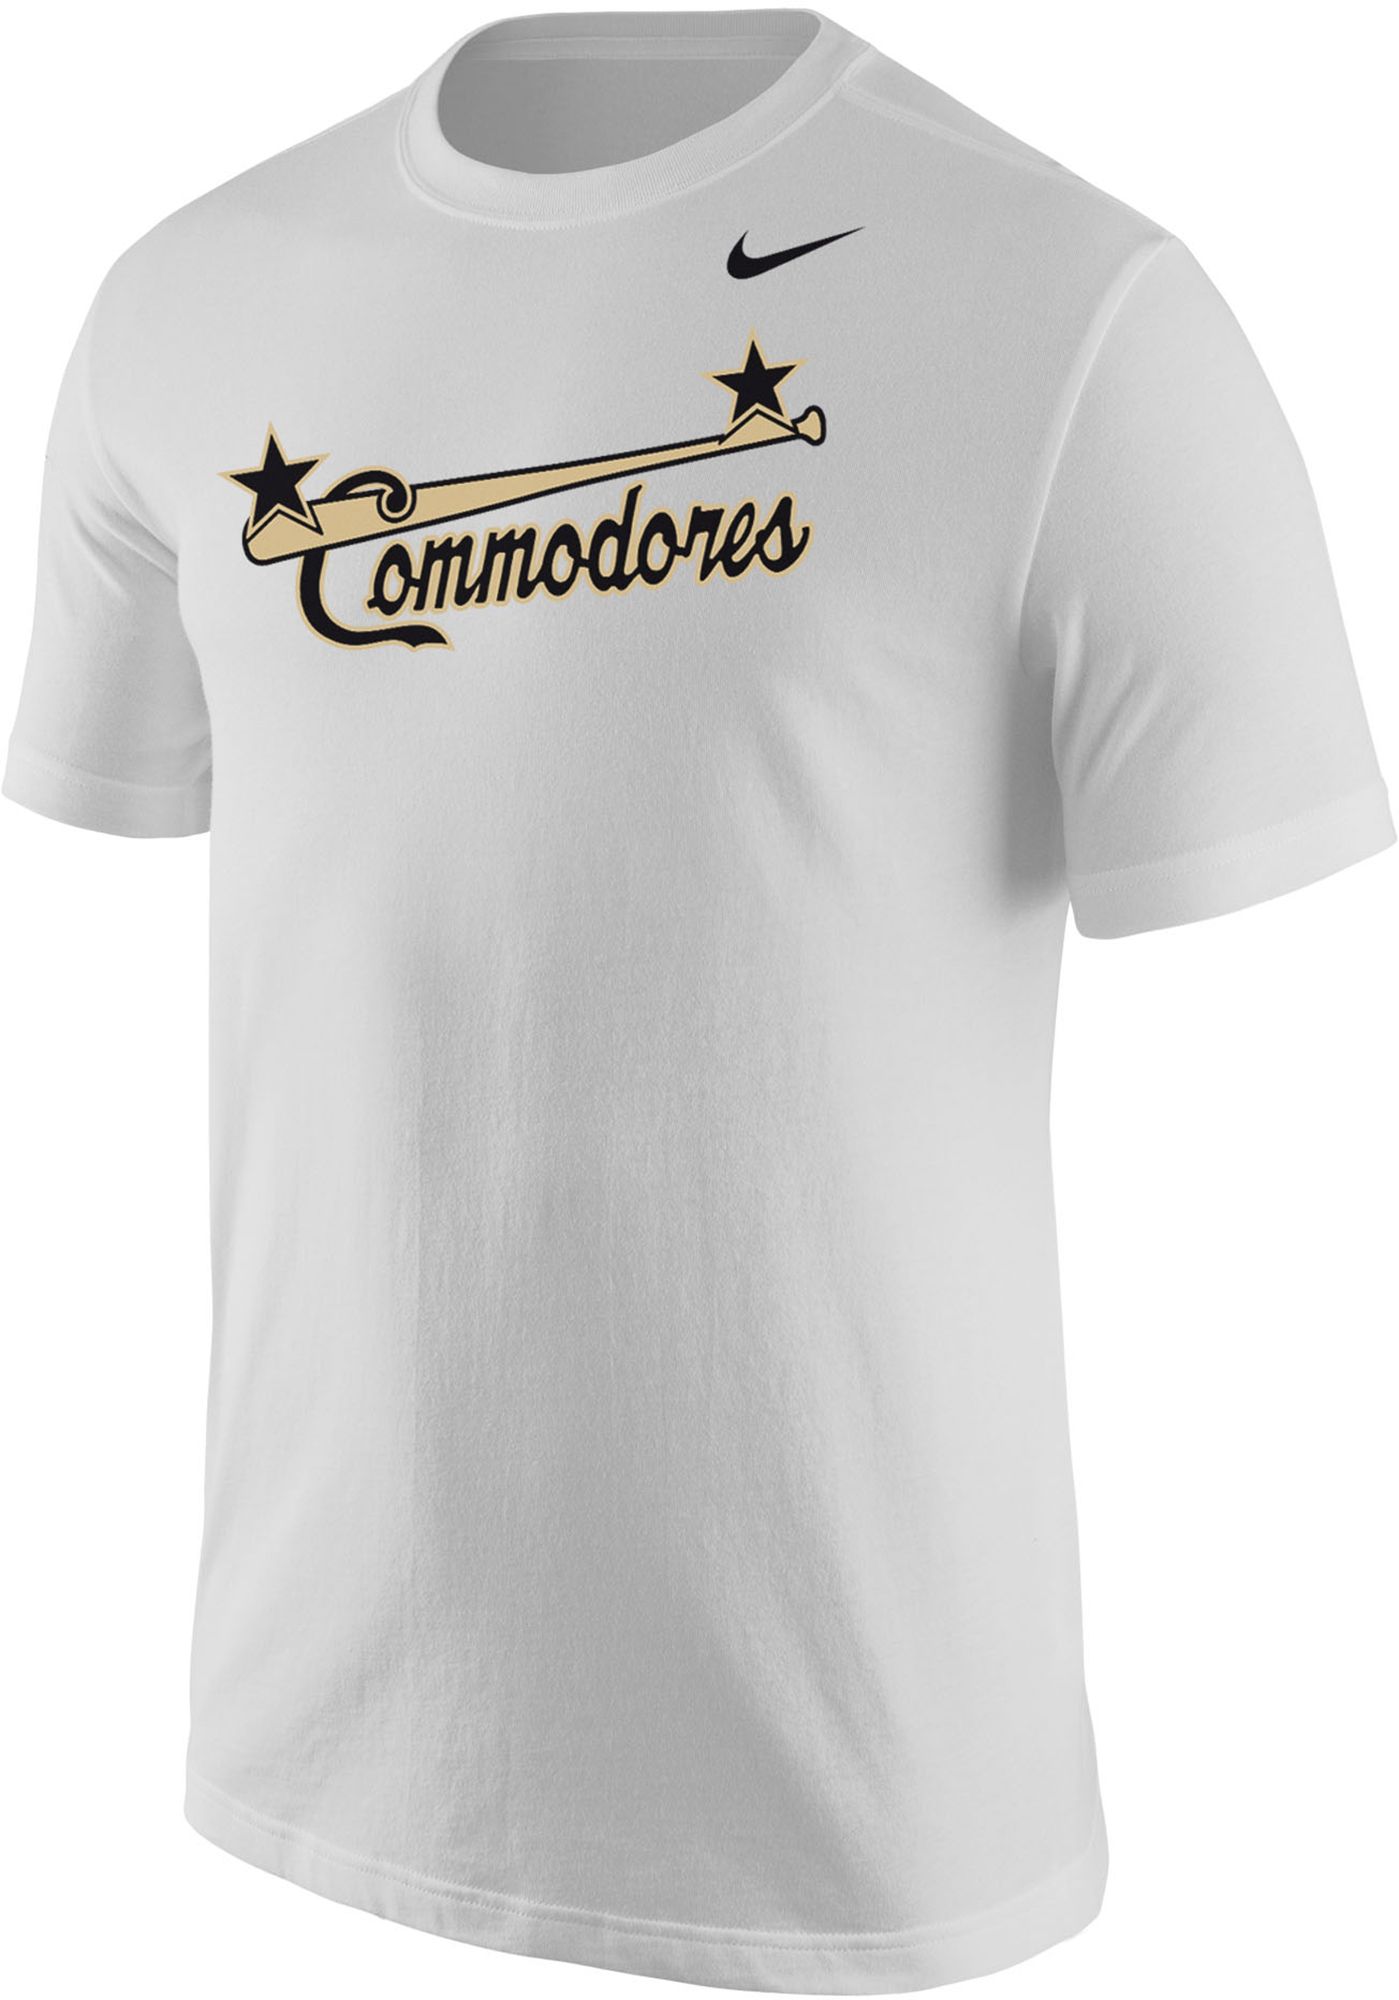 Nike Men's Vanderbilt Commodores White Wordmark T-Shirt